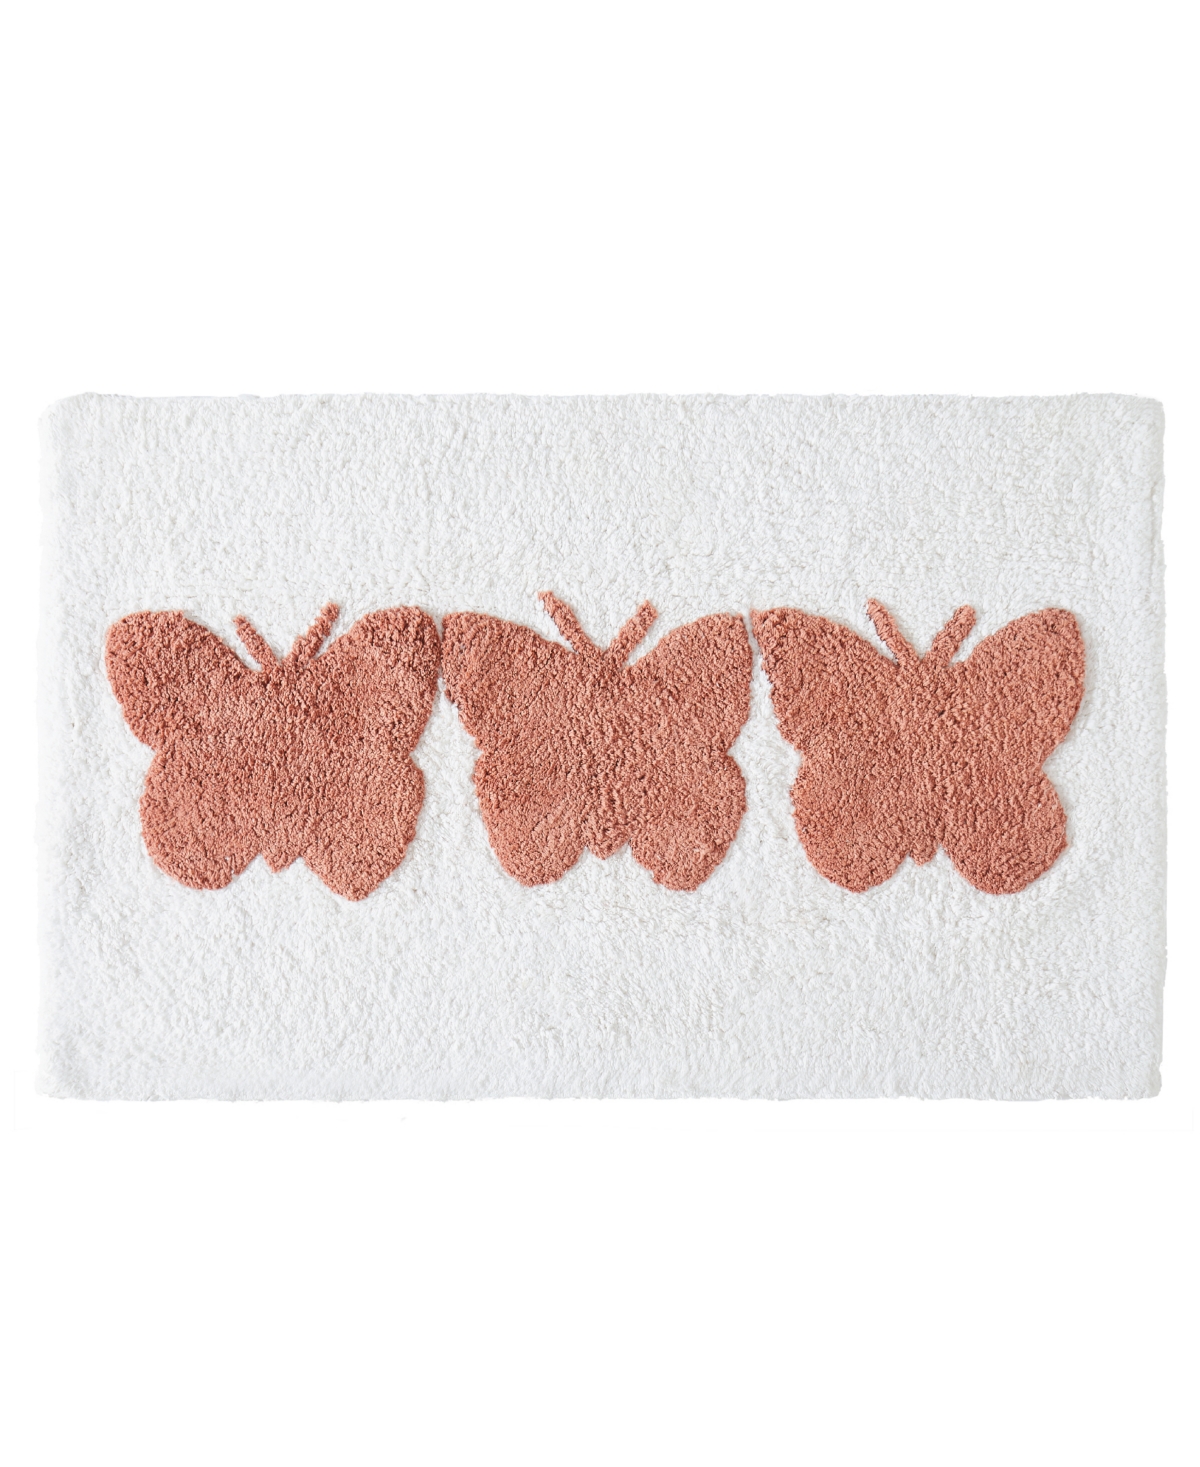 Butterfly Trio Cotton Bath Rug, 20" x 32" - White, Coral